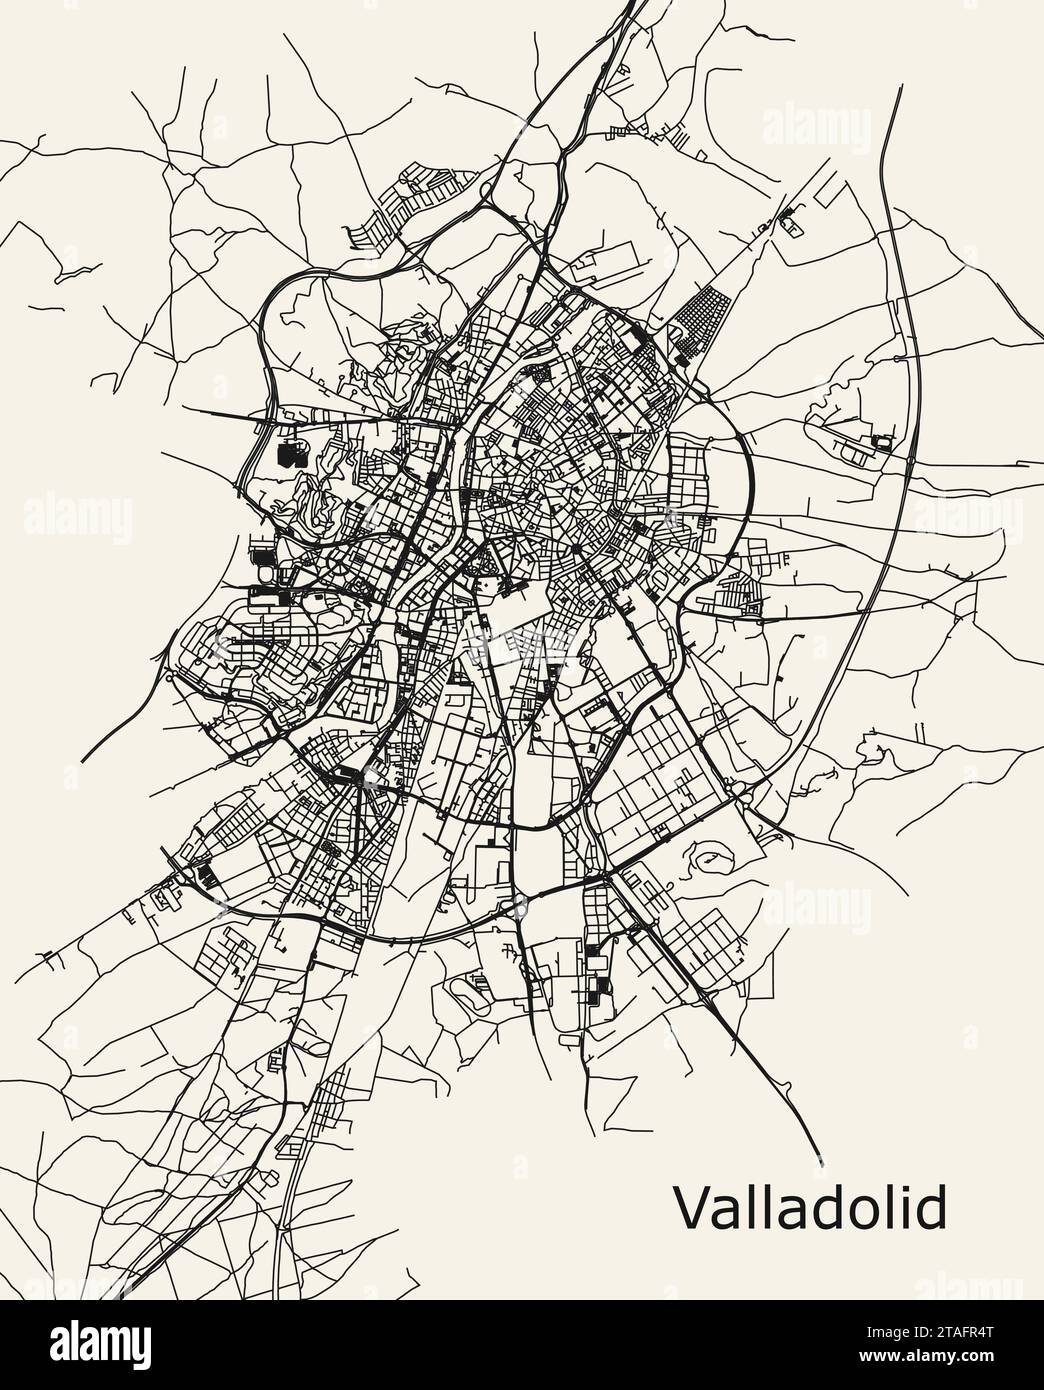 Vector city road map of Valladolid, Spain Stock Vector